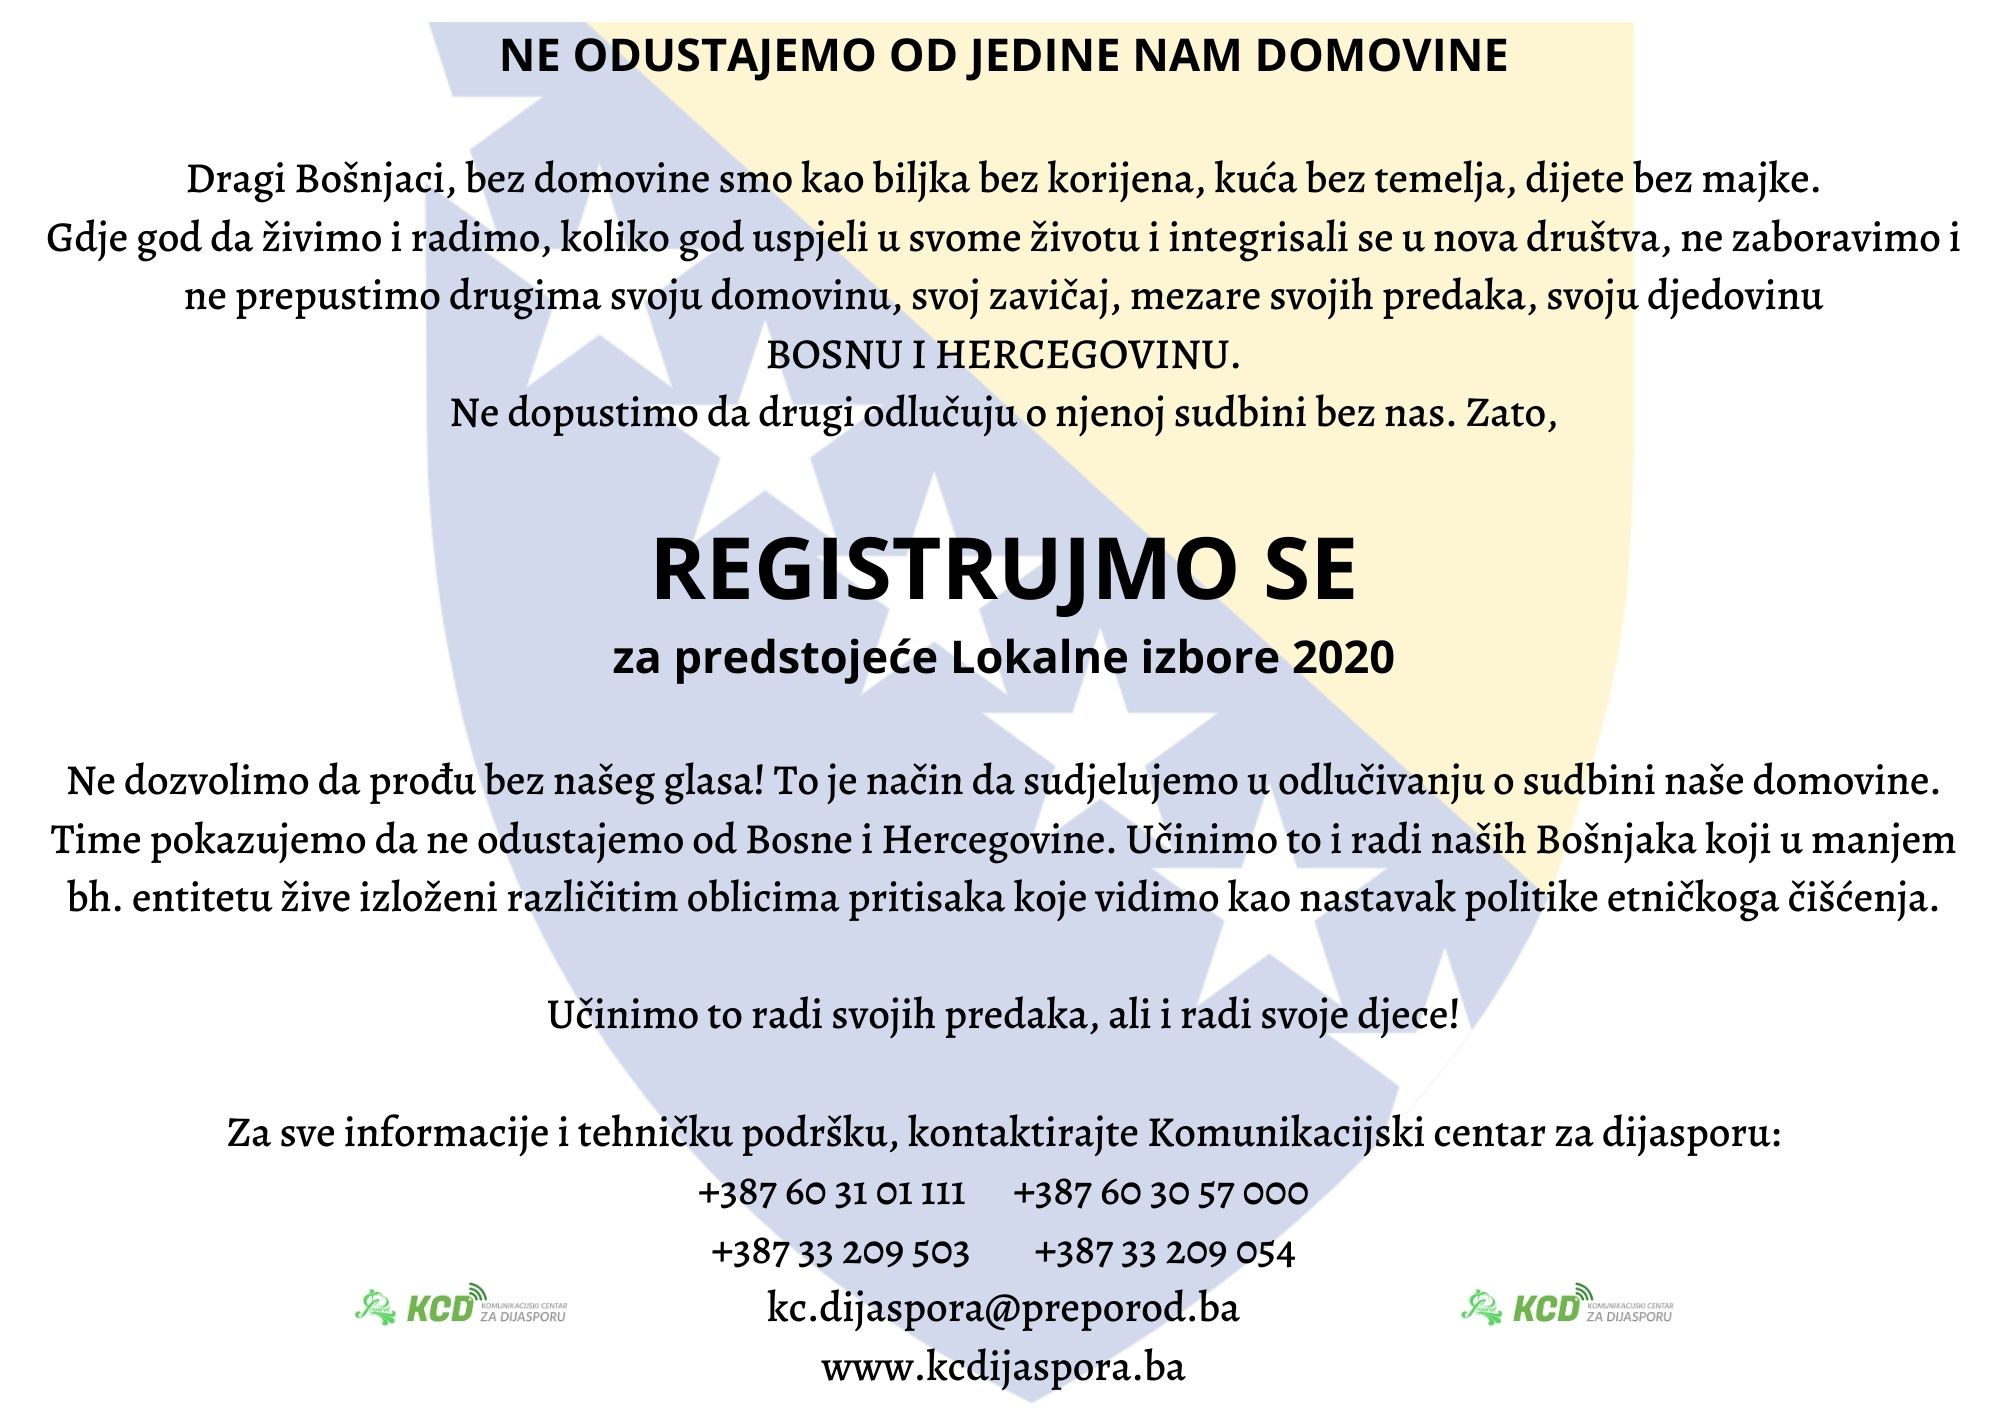 You are currently viewing Registrujmo se za Lokalne izbore u BiH 2020.